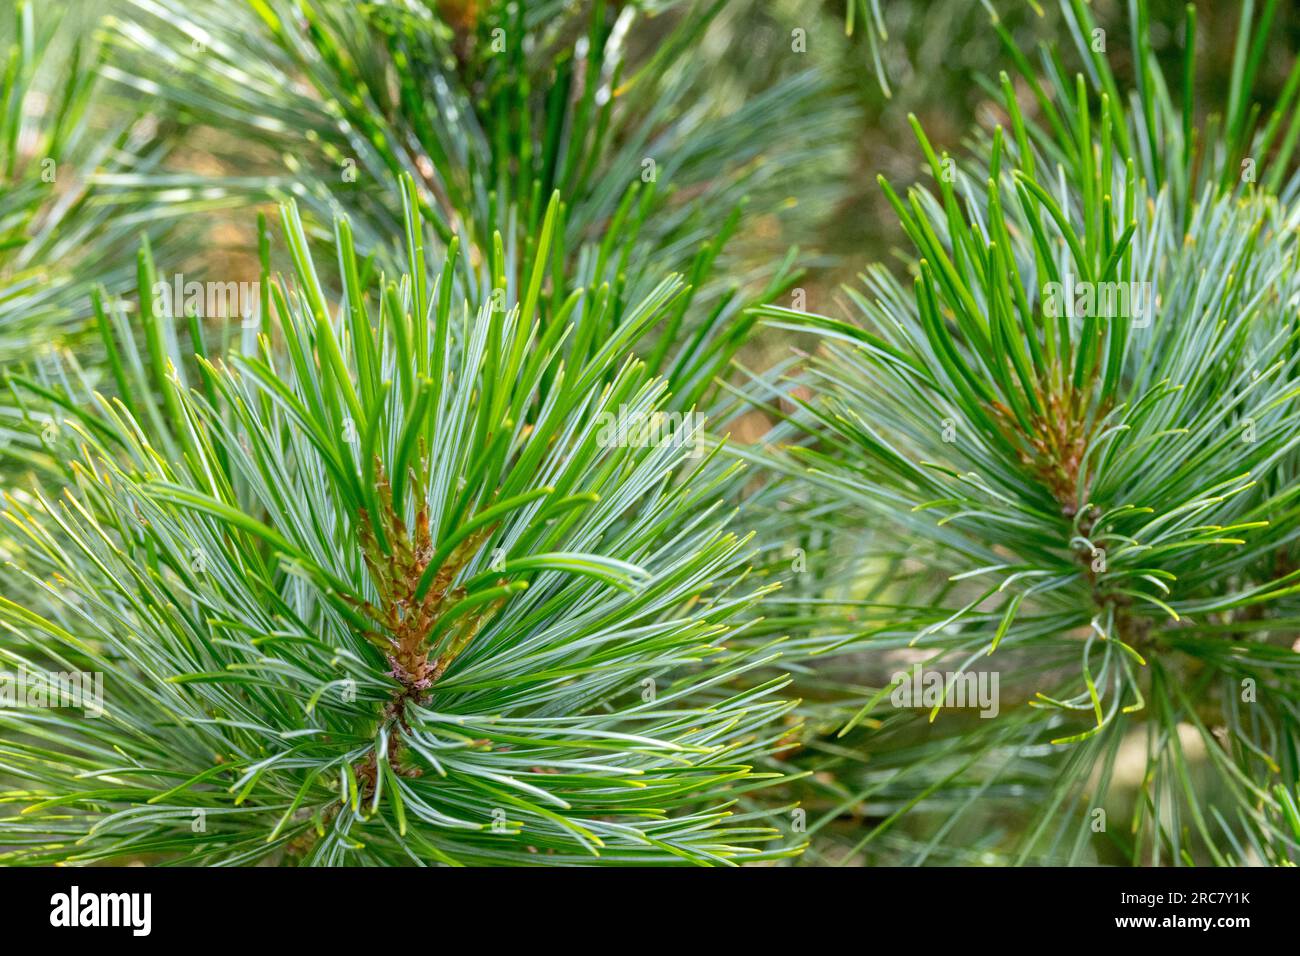 Korean Pine, Needles, Green, Coniferous, Plant, Pinus koraiensis Stock Photo